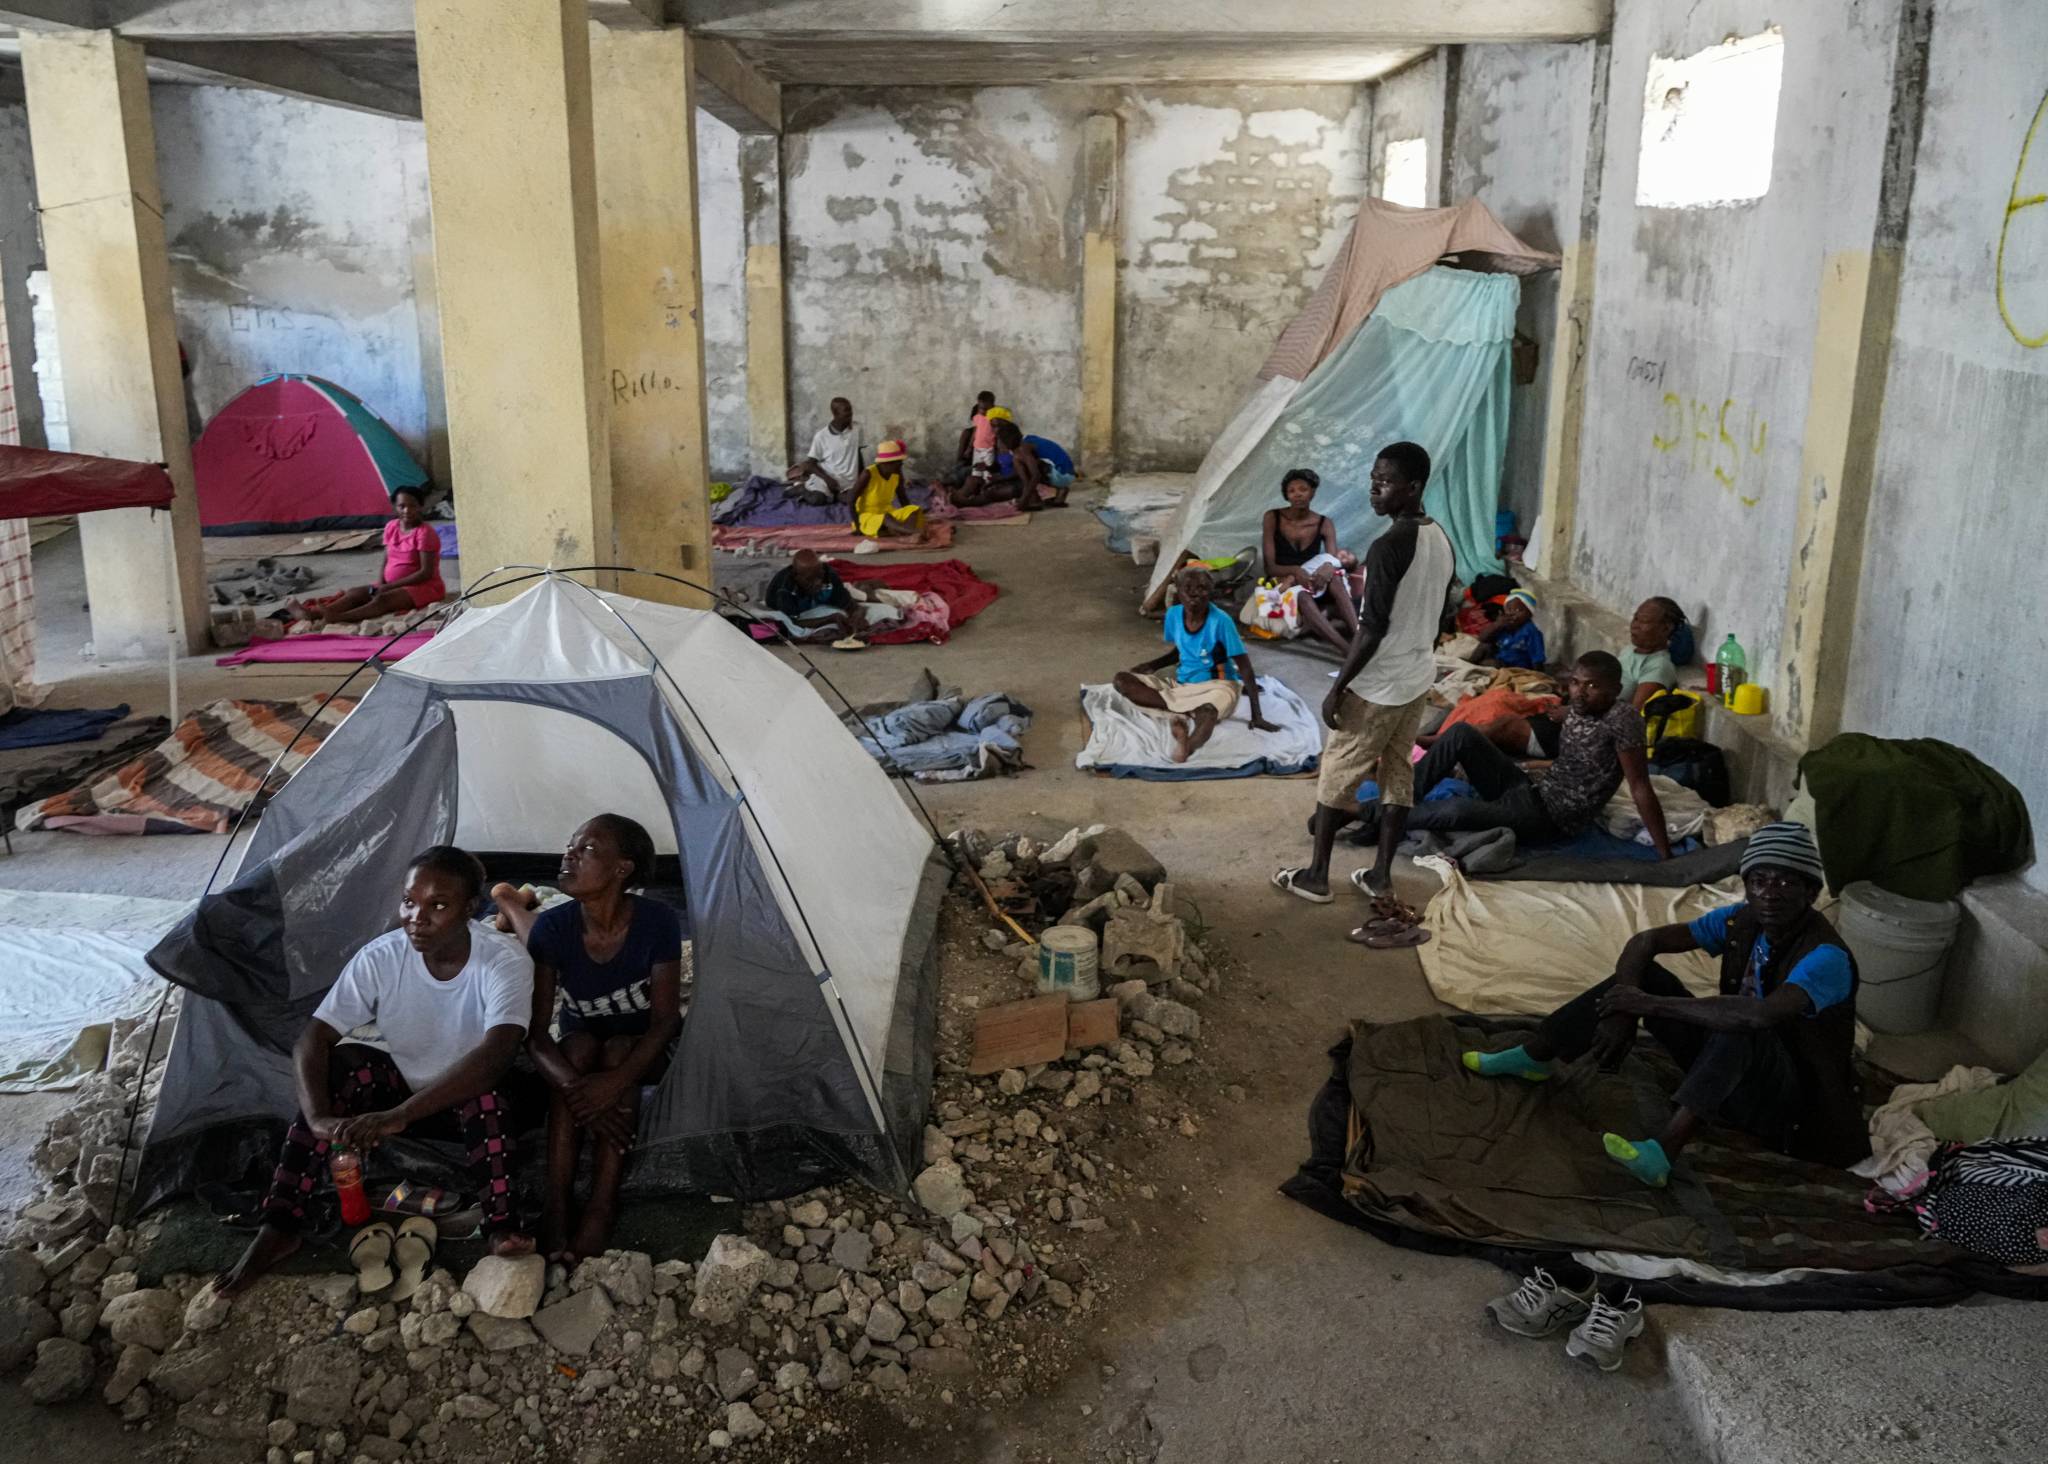 Terrible conditions in Haiti